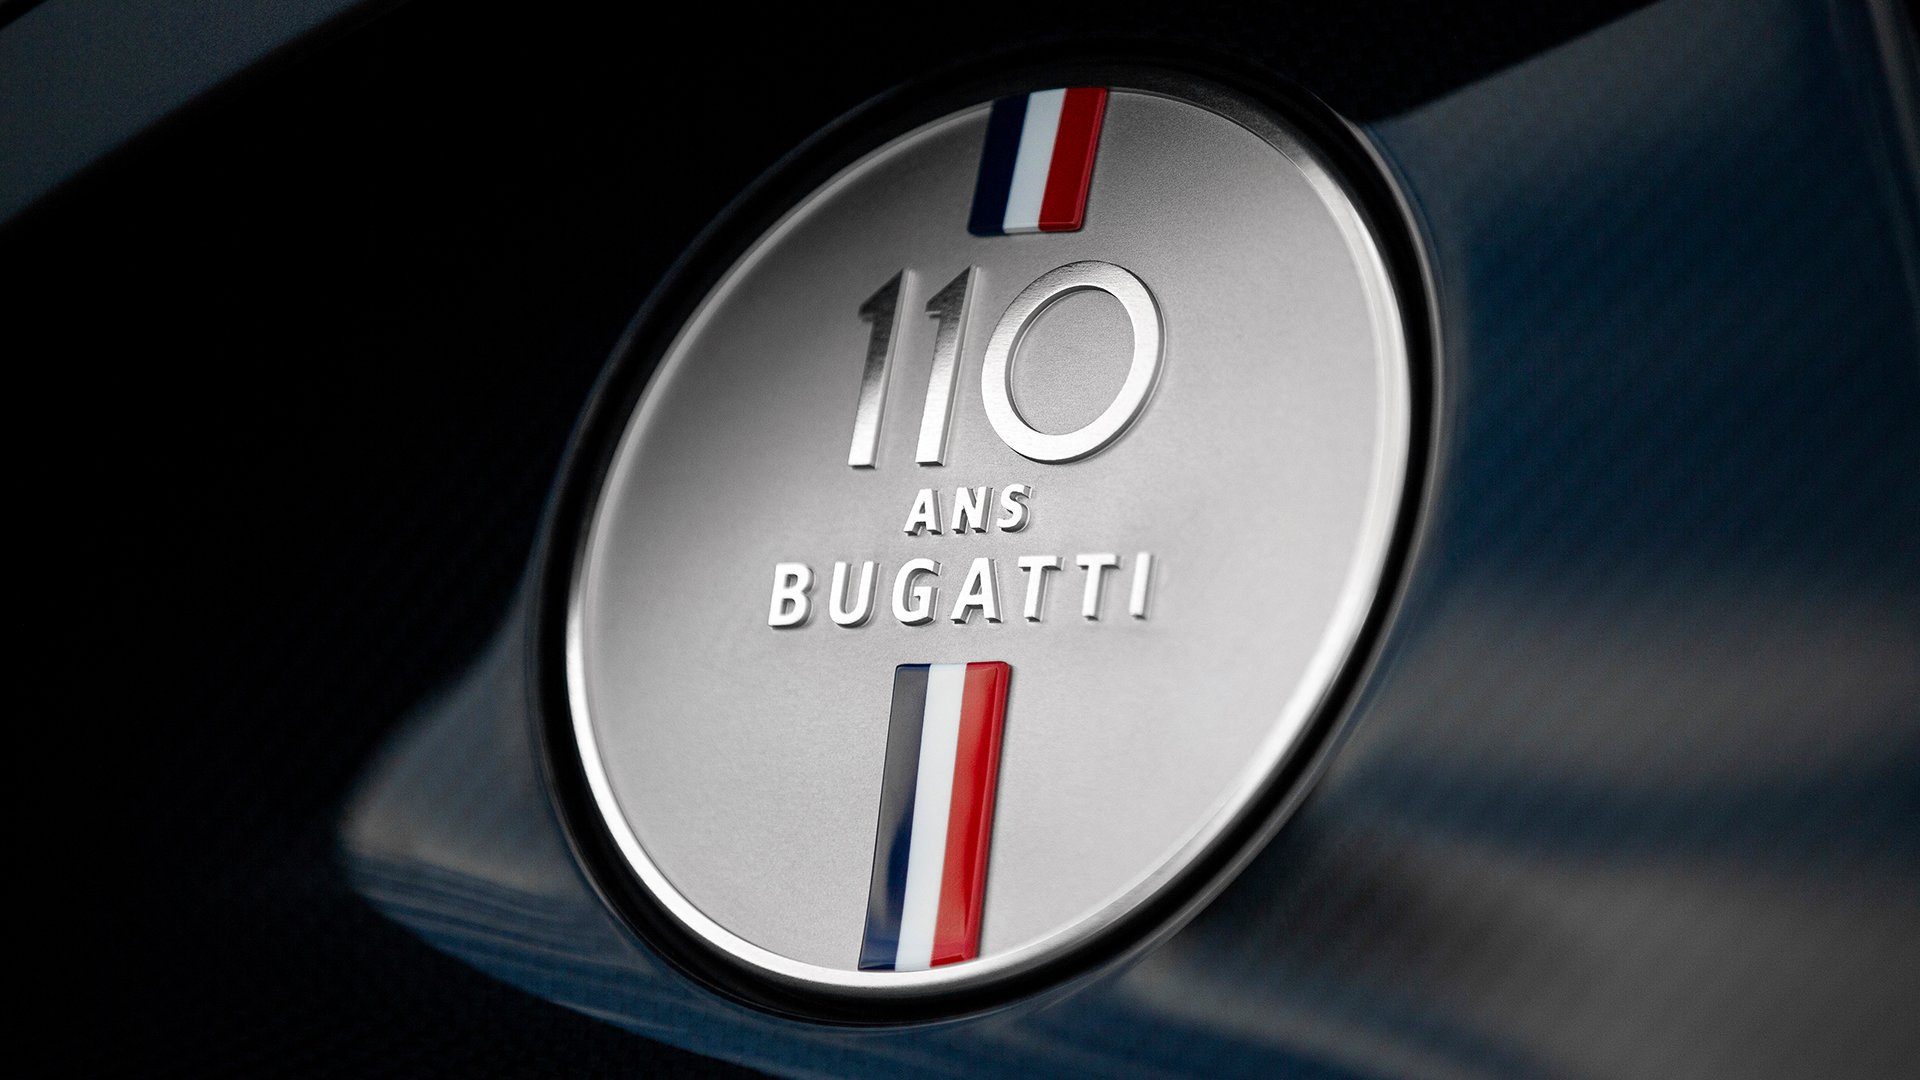 Bugatti Baby Ii 110 Anniversary - Bugatti Chiron 100 Ans - HD Wallpaper 